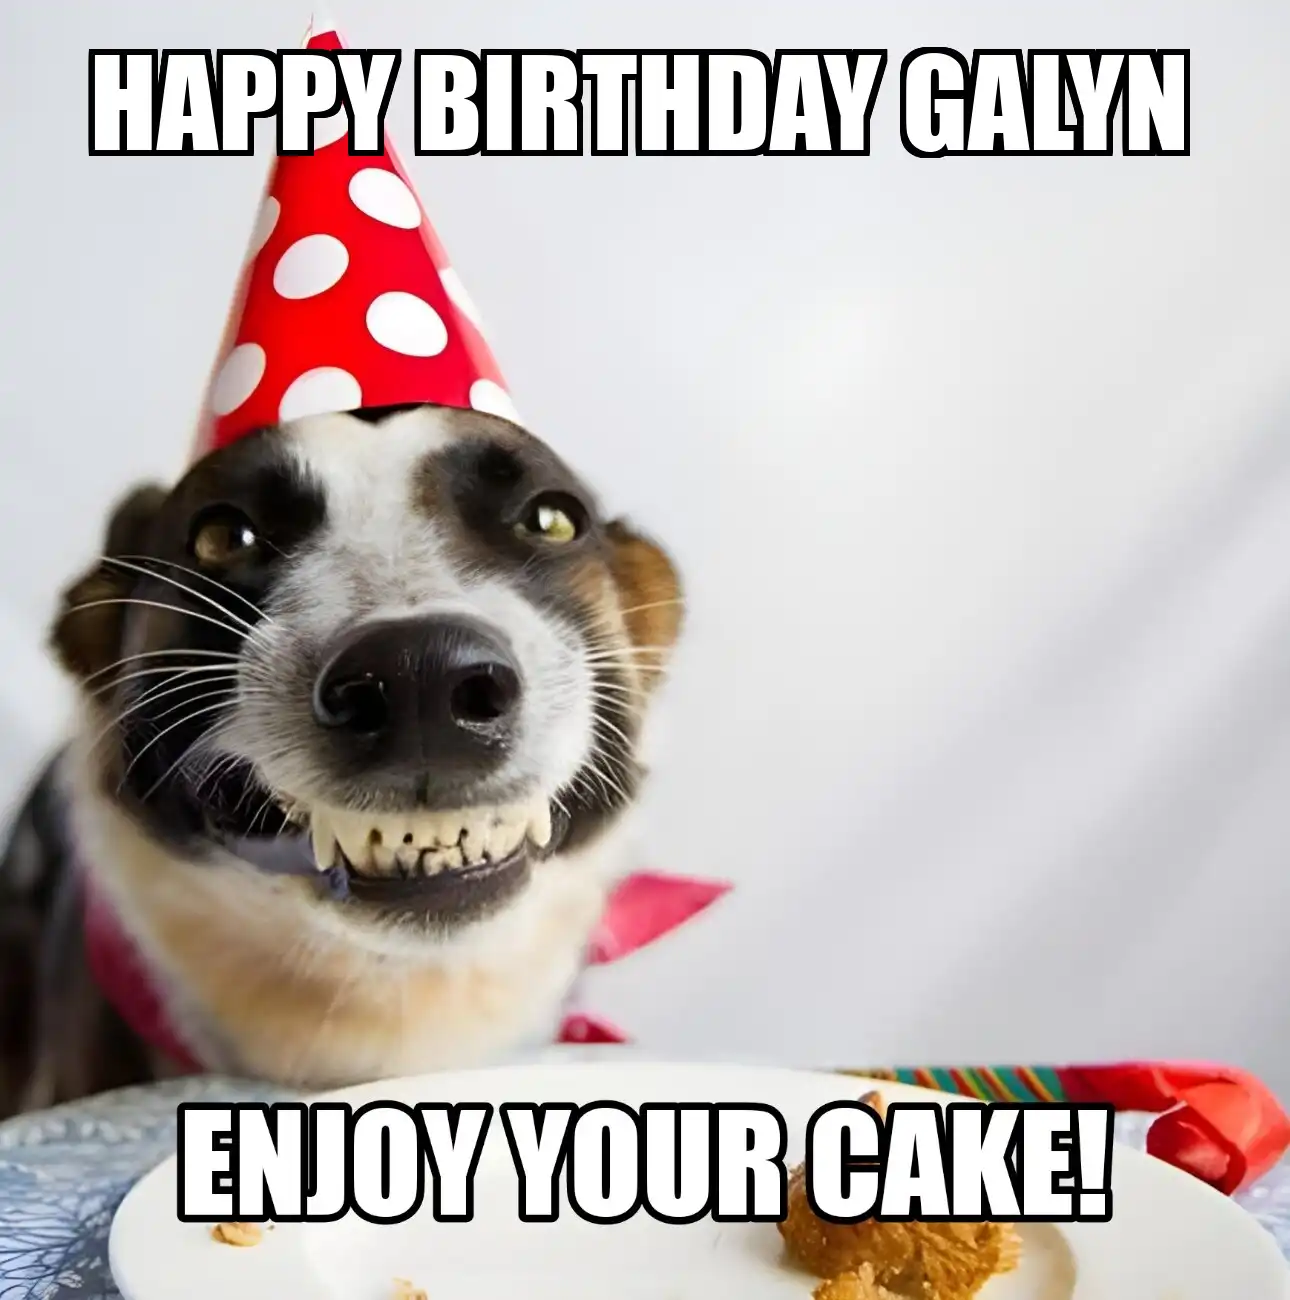 Happy Birthday Galyn Enjoy Your Cake Dog Meme